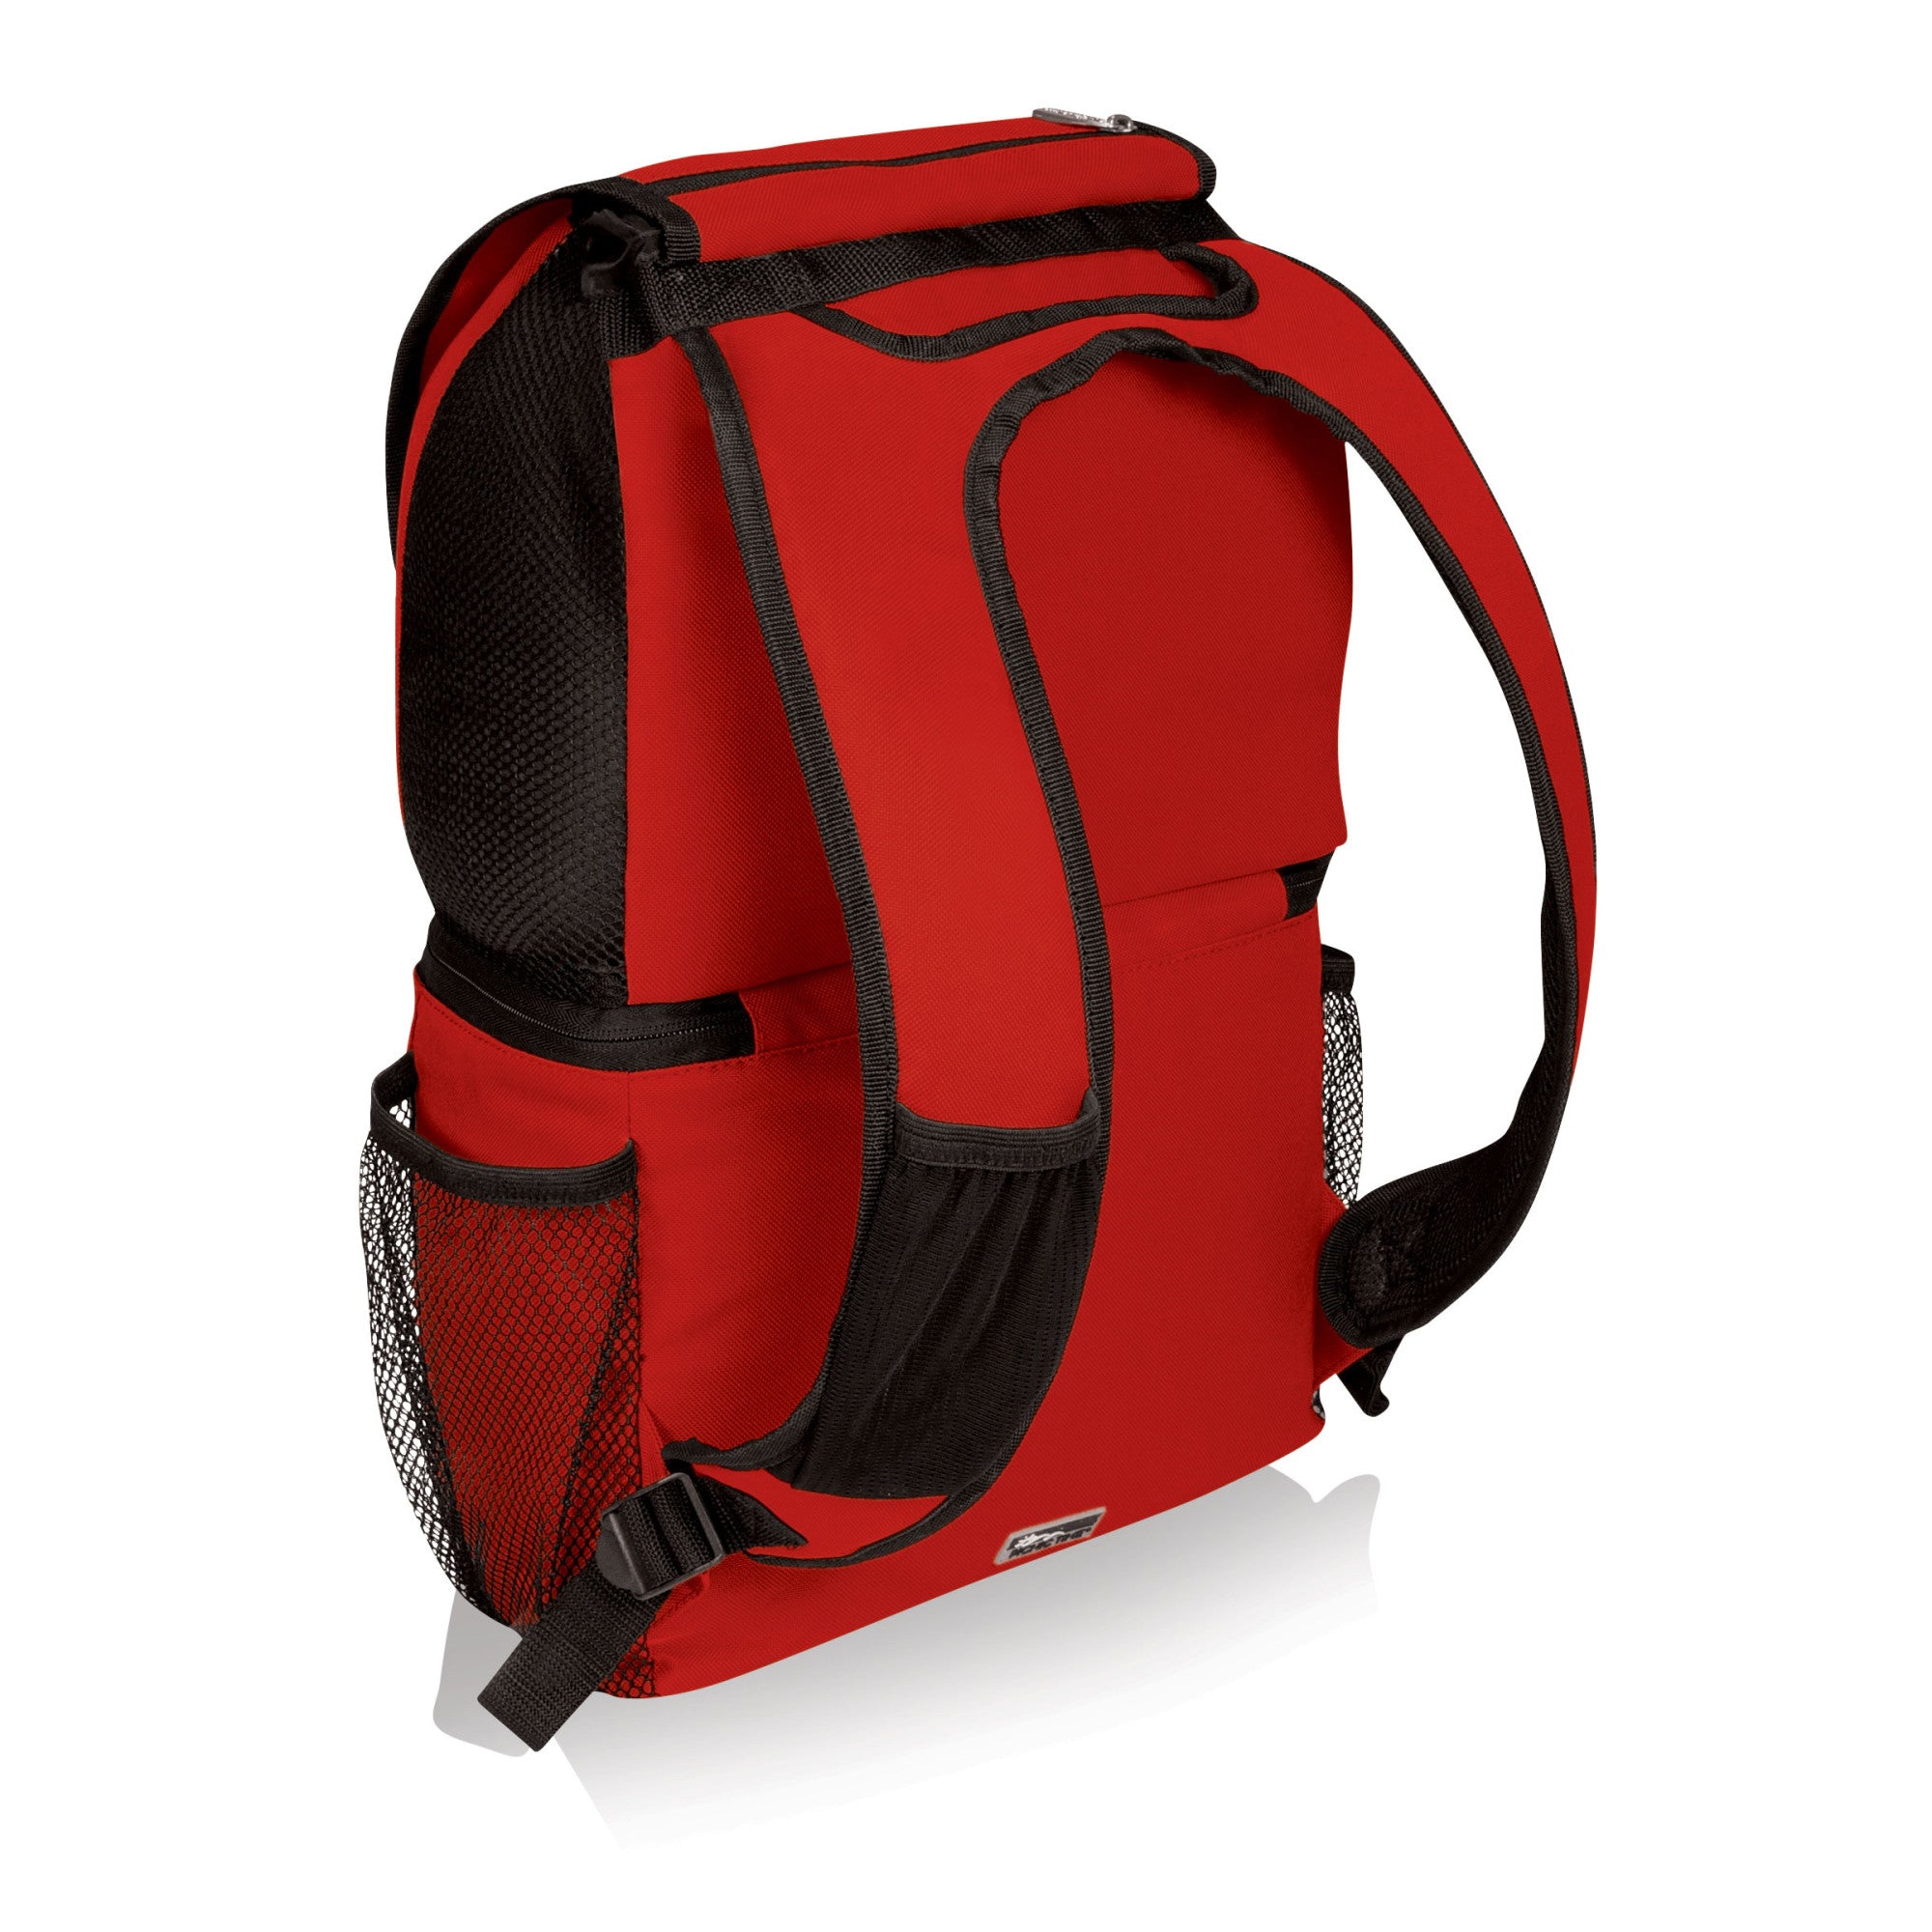 San Francisco 49ers - Zuma Backpack Cooler